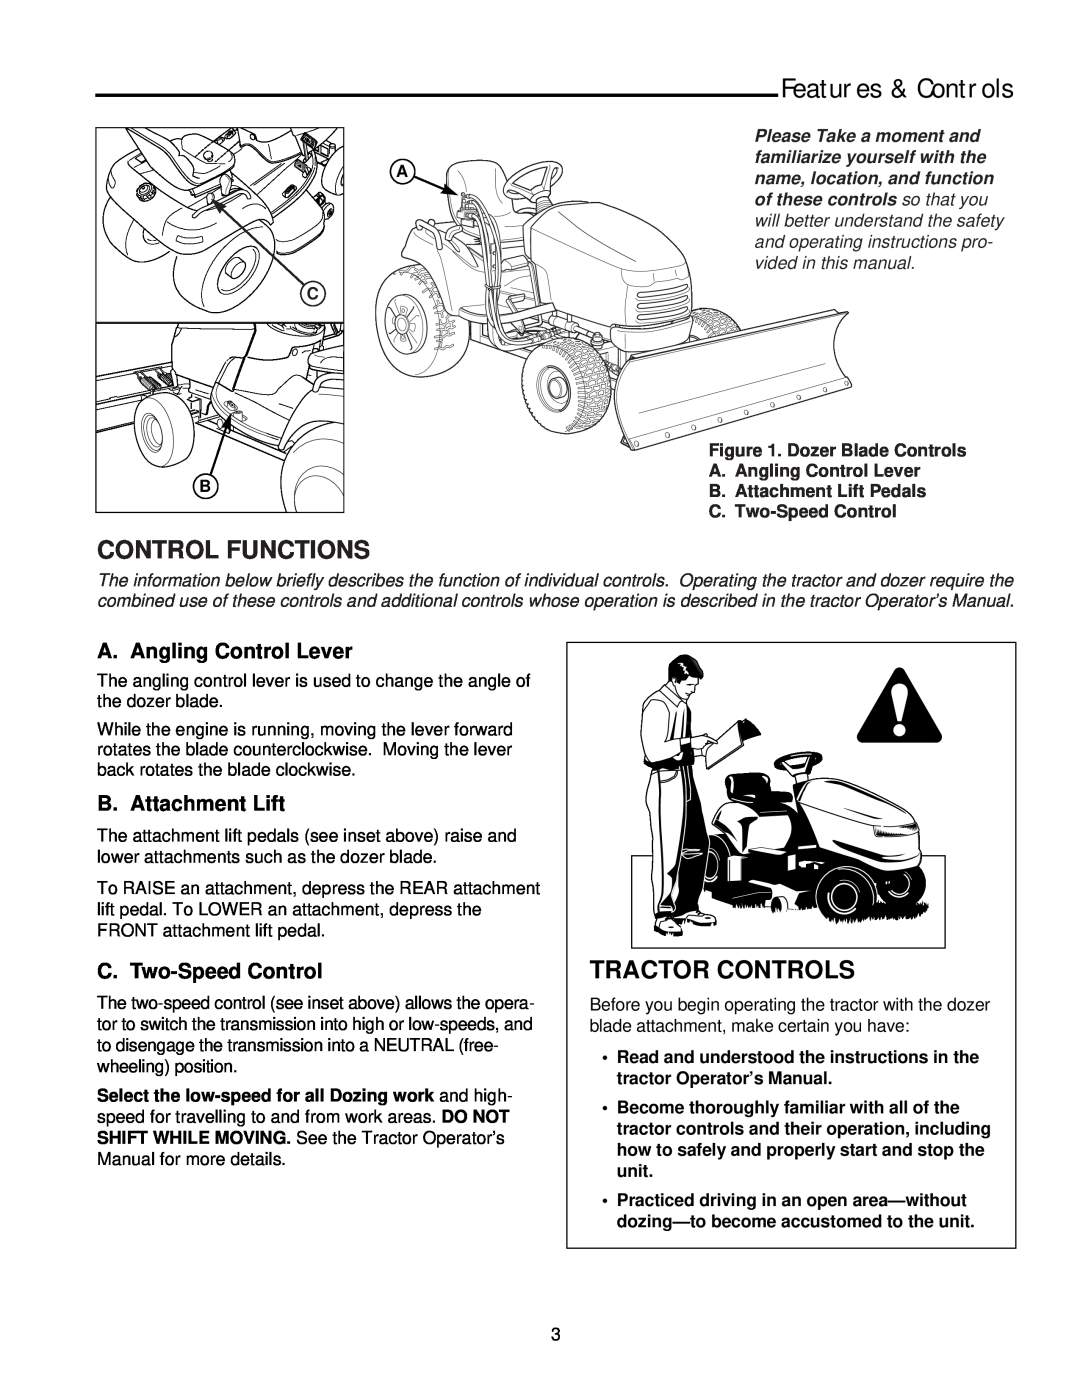 Snapper 2137 manual Features & Controls, Control Functions, Tractor Controls, A. Angling Control Lever, B. Attachment Lift 